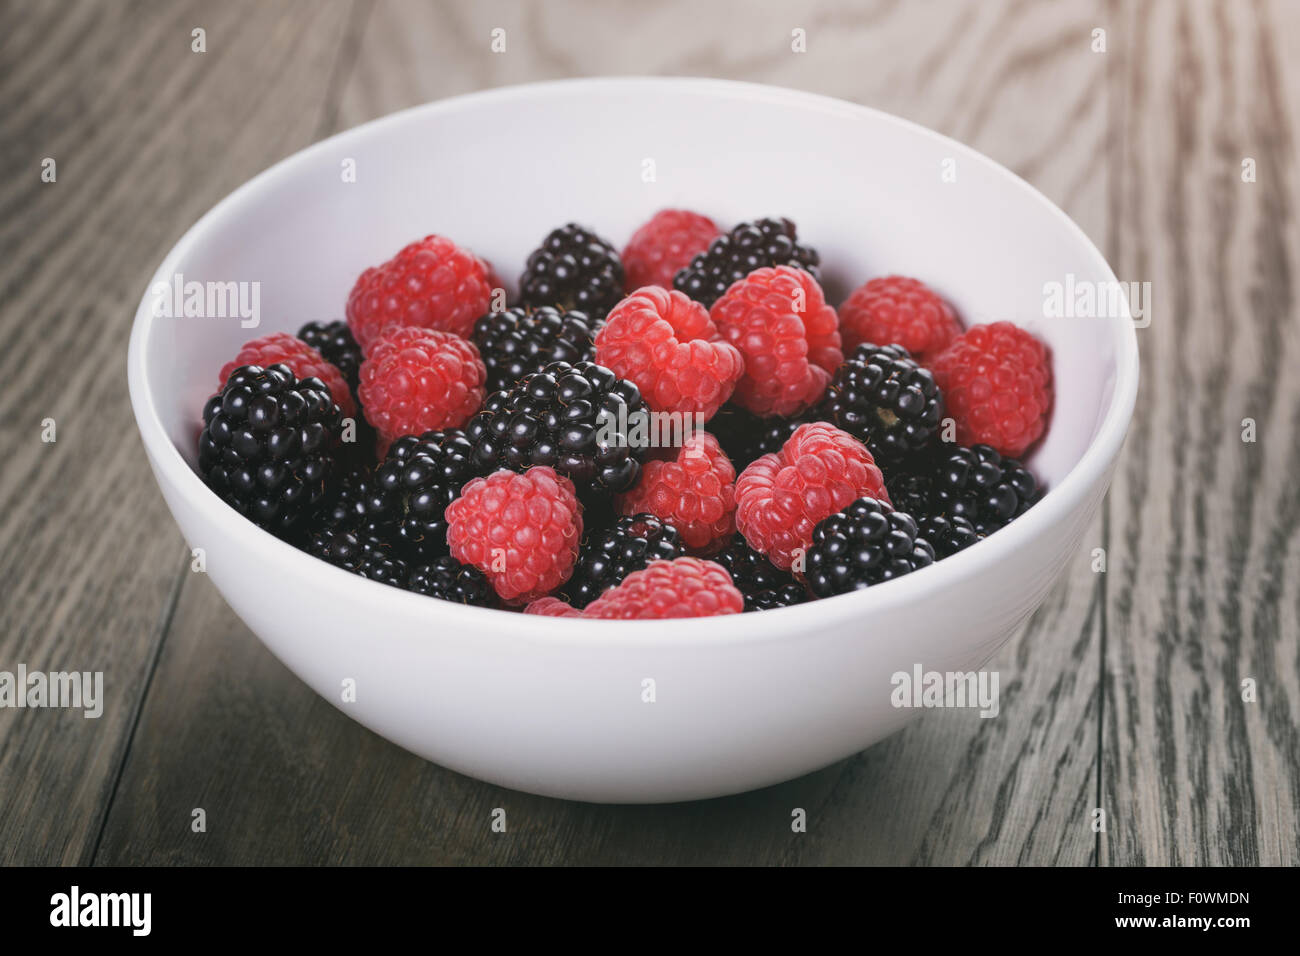 raspberries and blackberries in white bowl on wood table Stock Photo